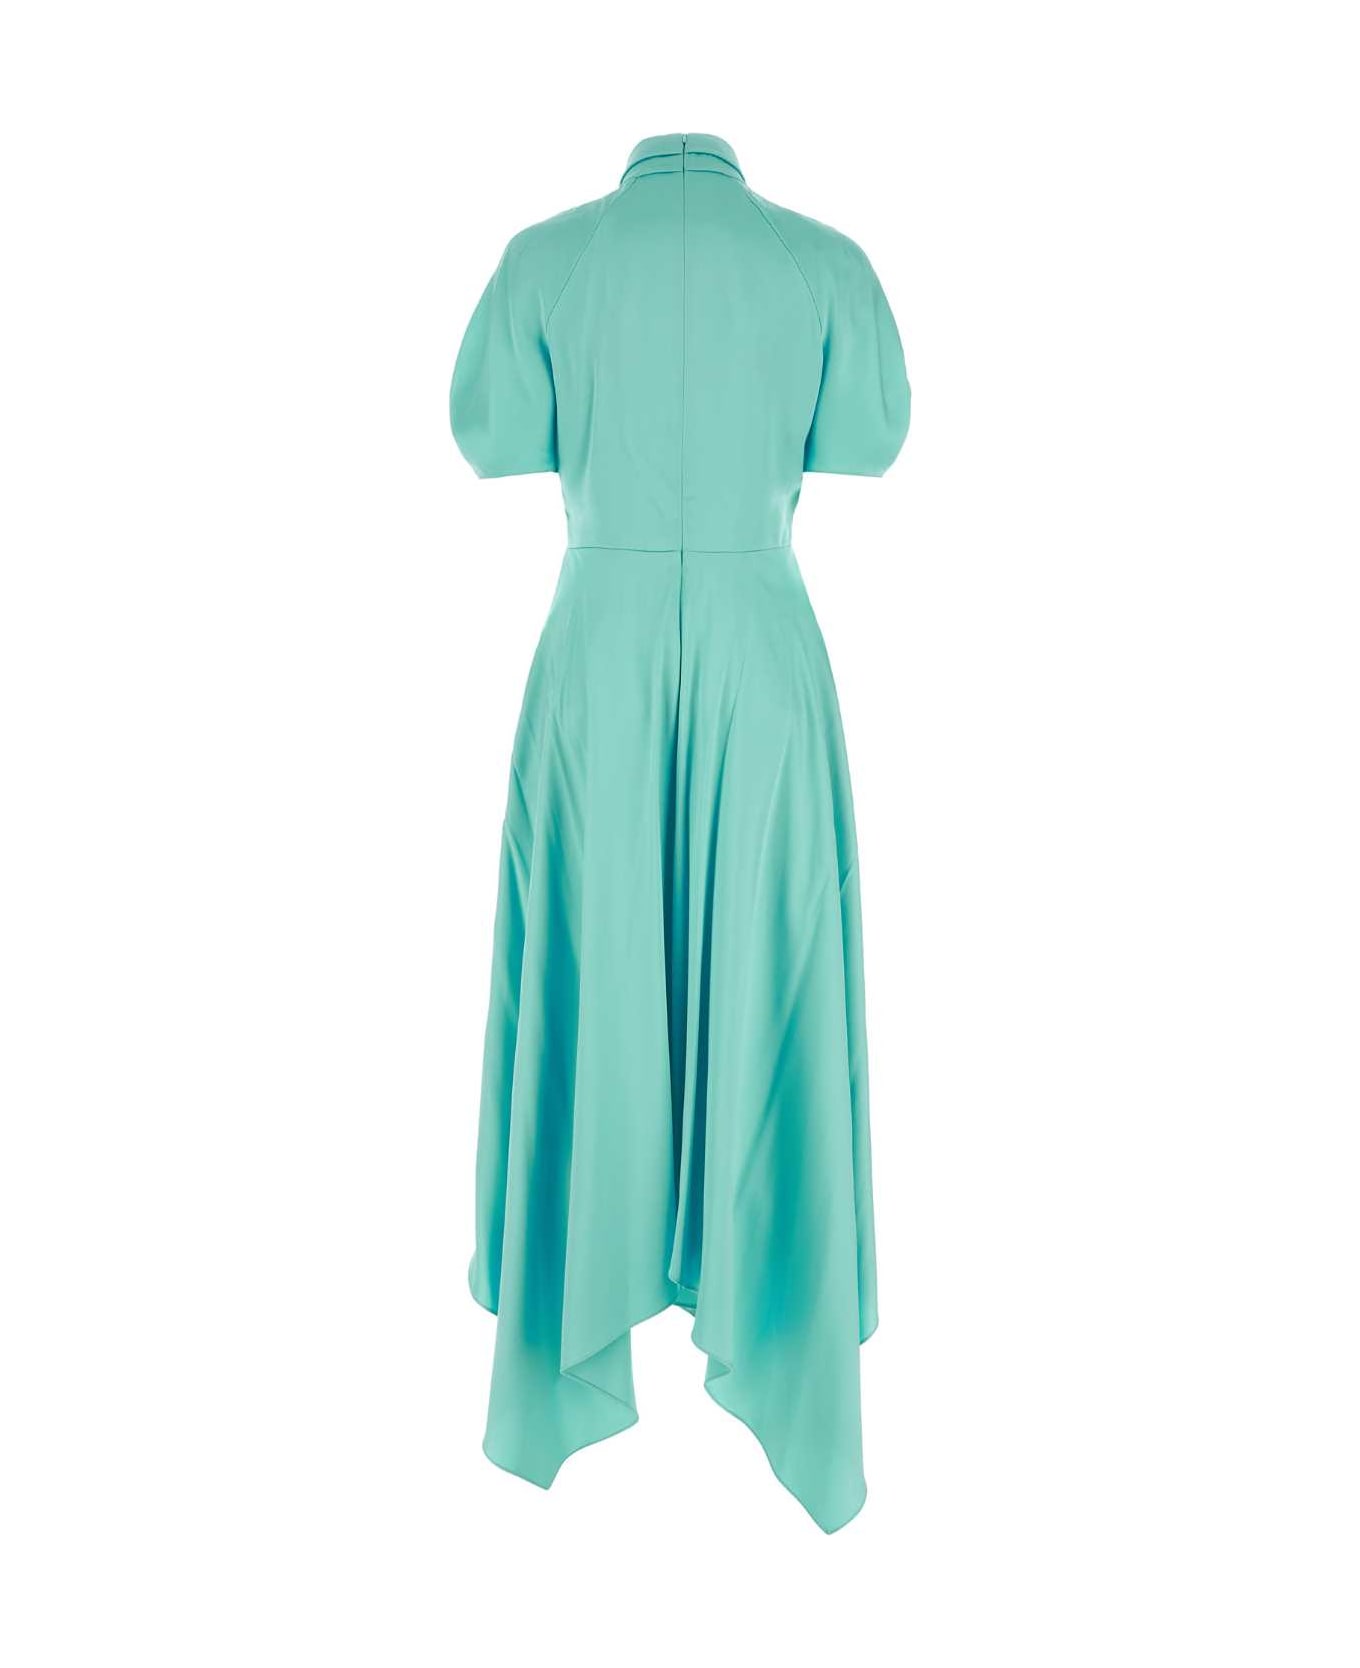 Stella McCartney Sea Green Satin Dress - AQUAMARINE